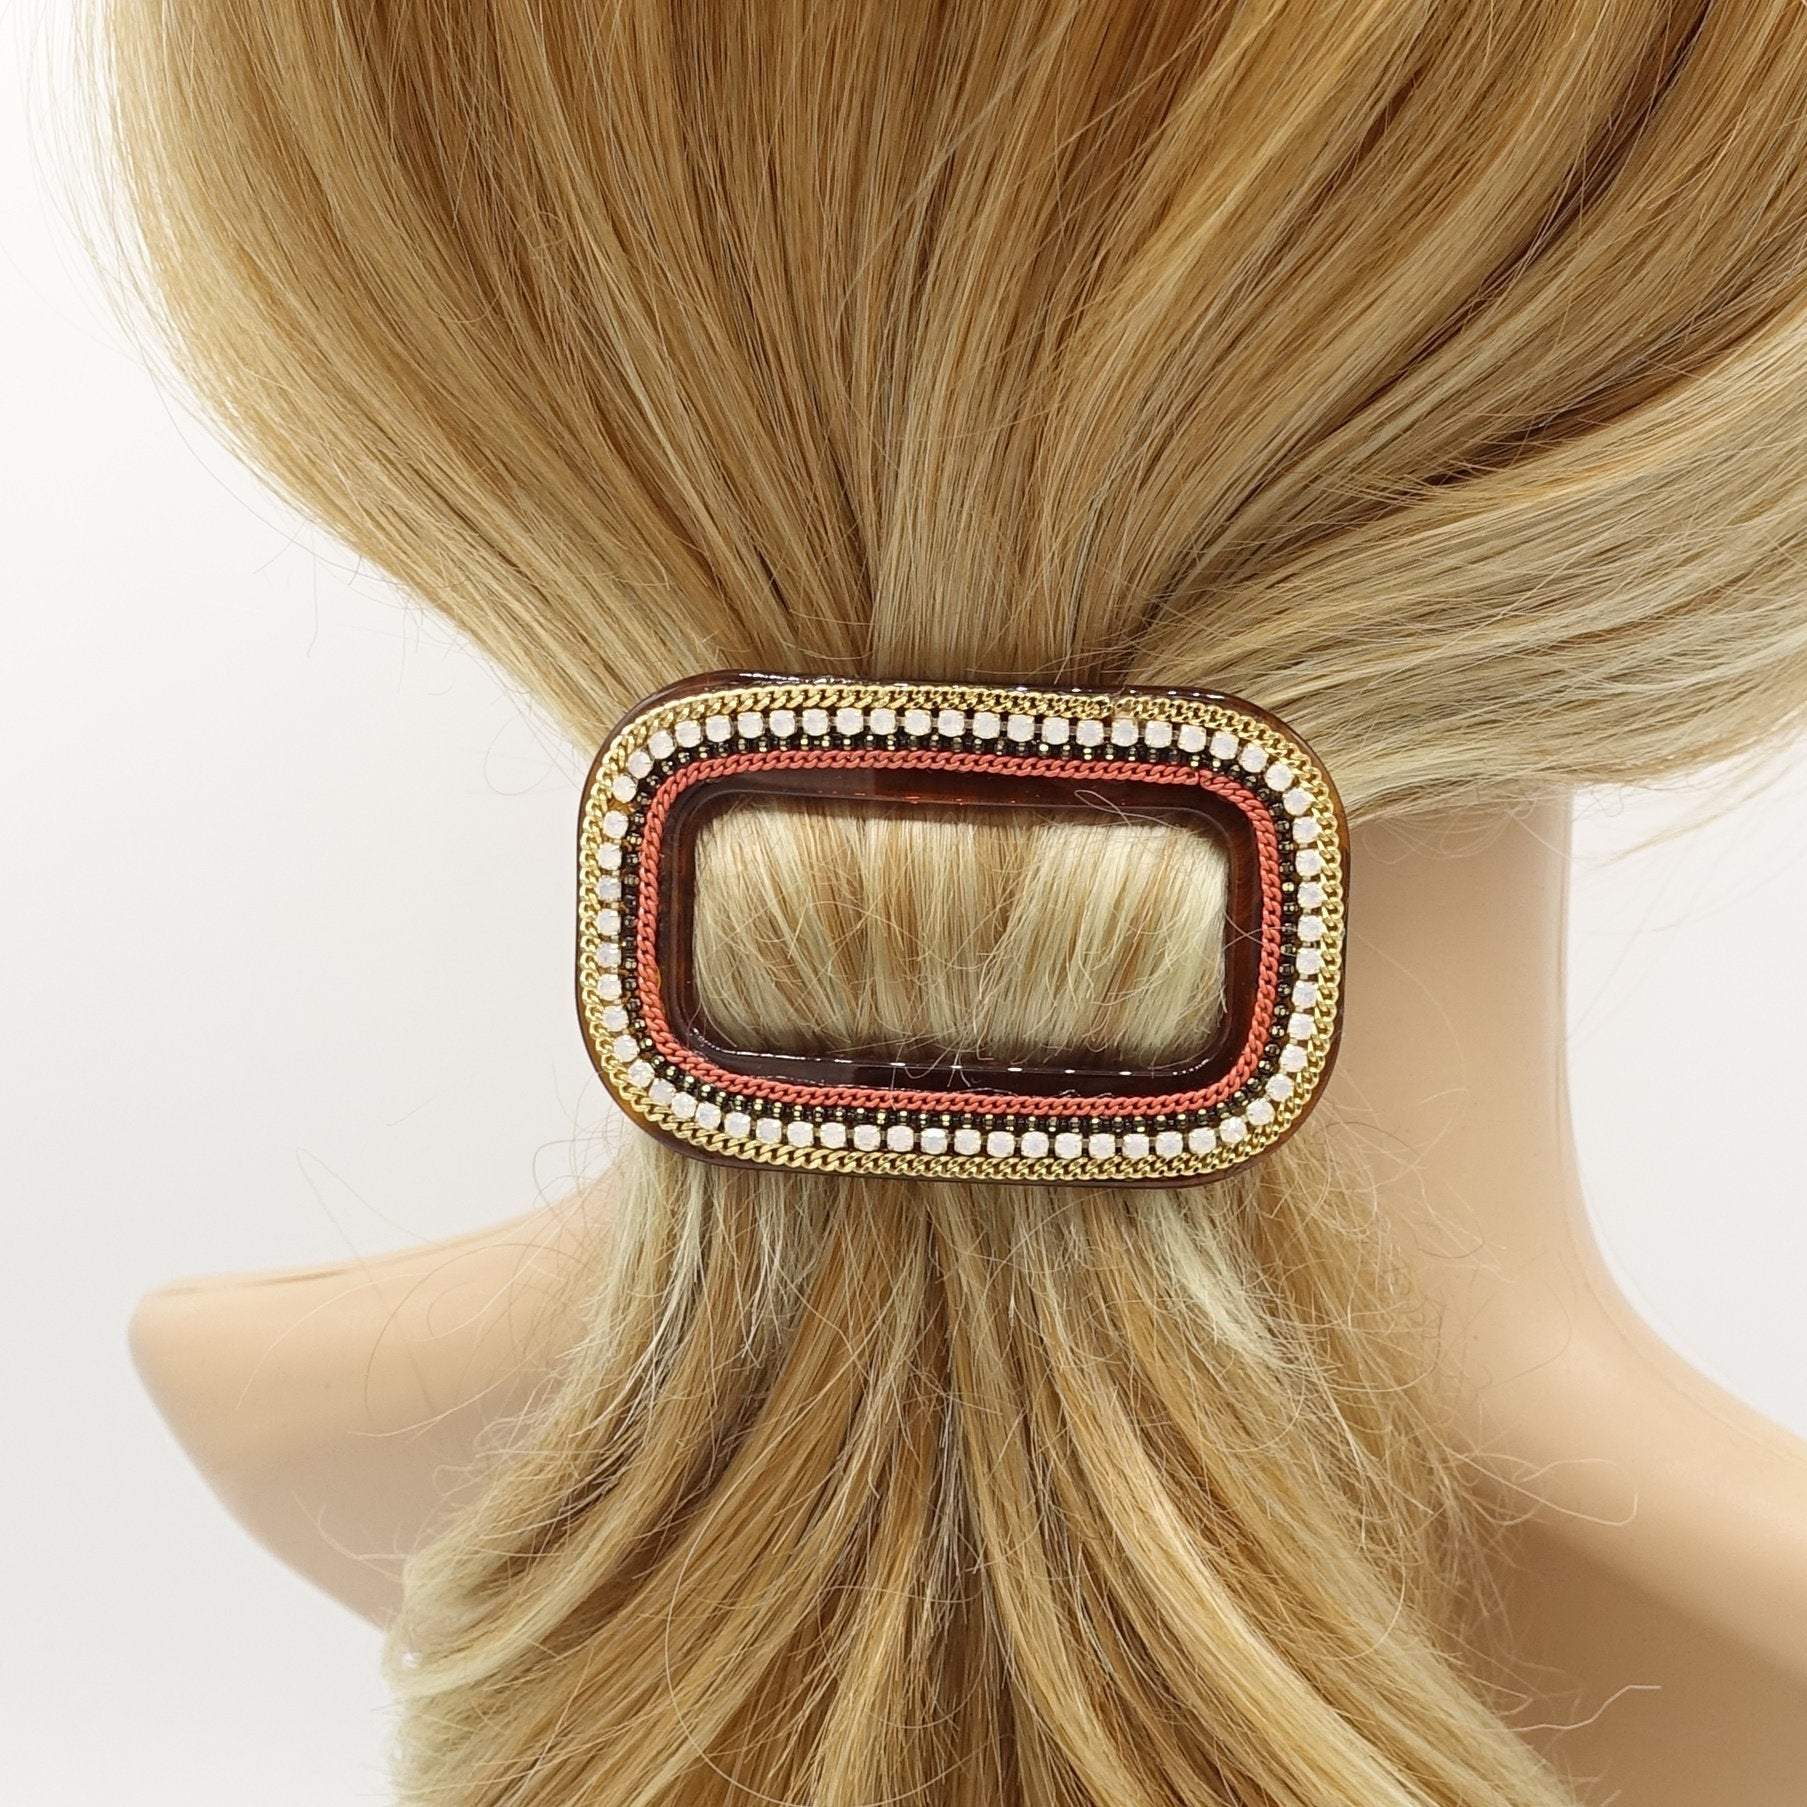 VeryShine claw/banana/barrette Rectangle red brick opal chain hair barrette hair accessory for women